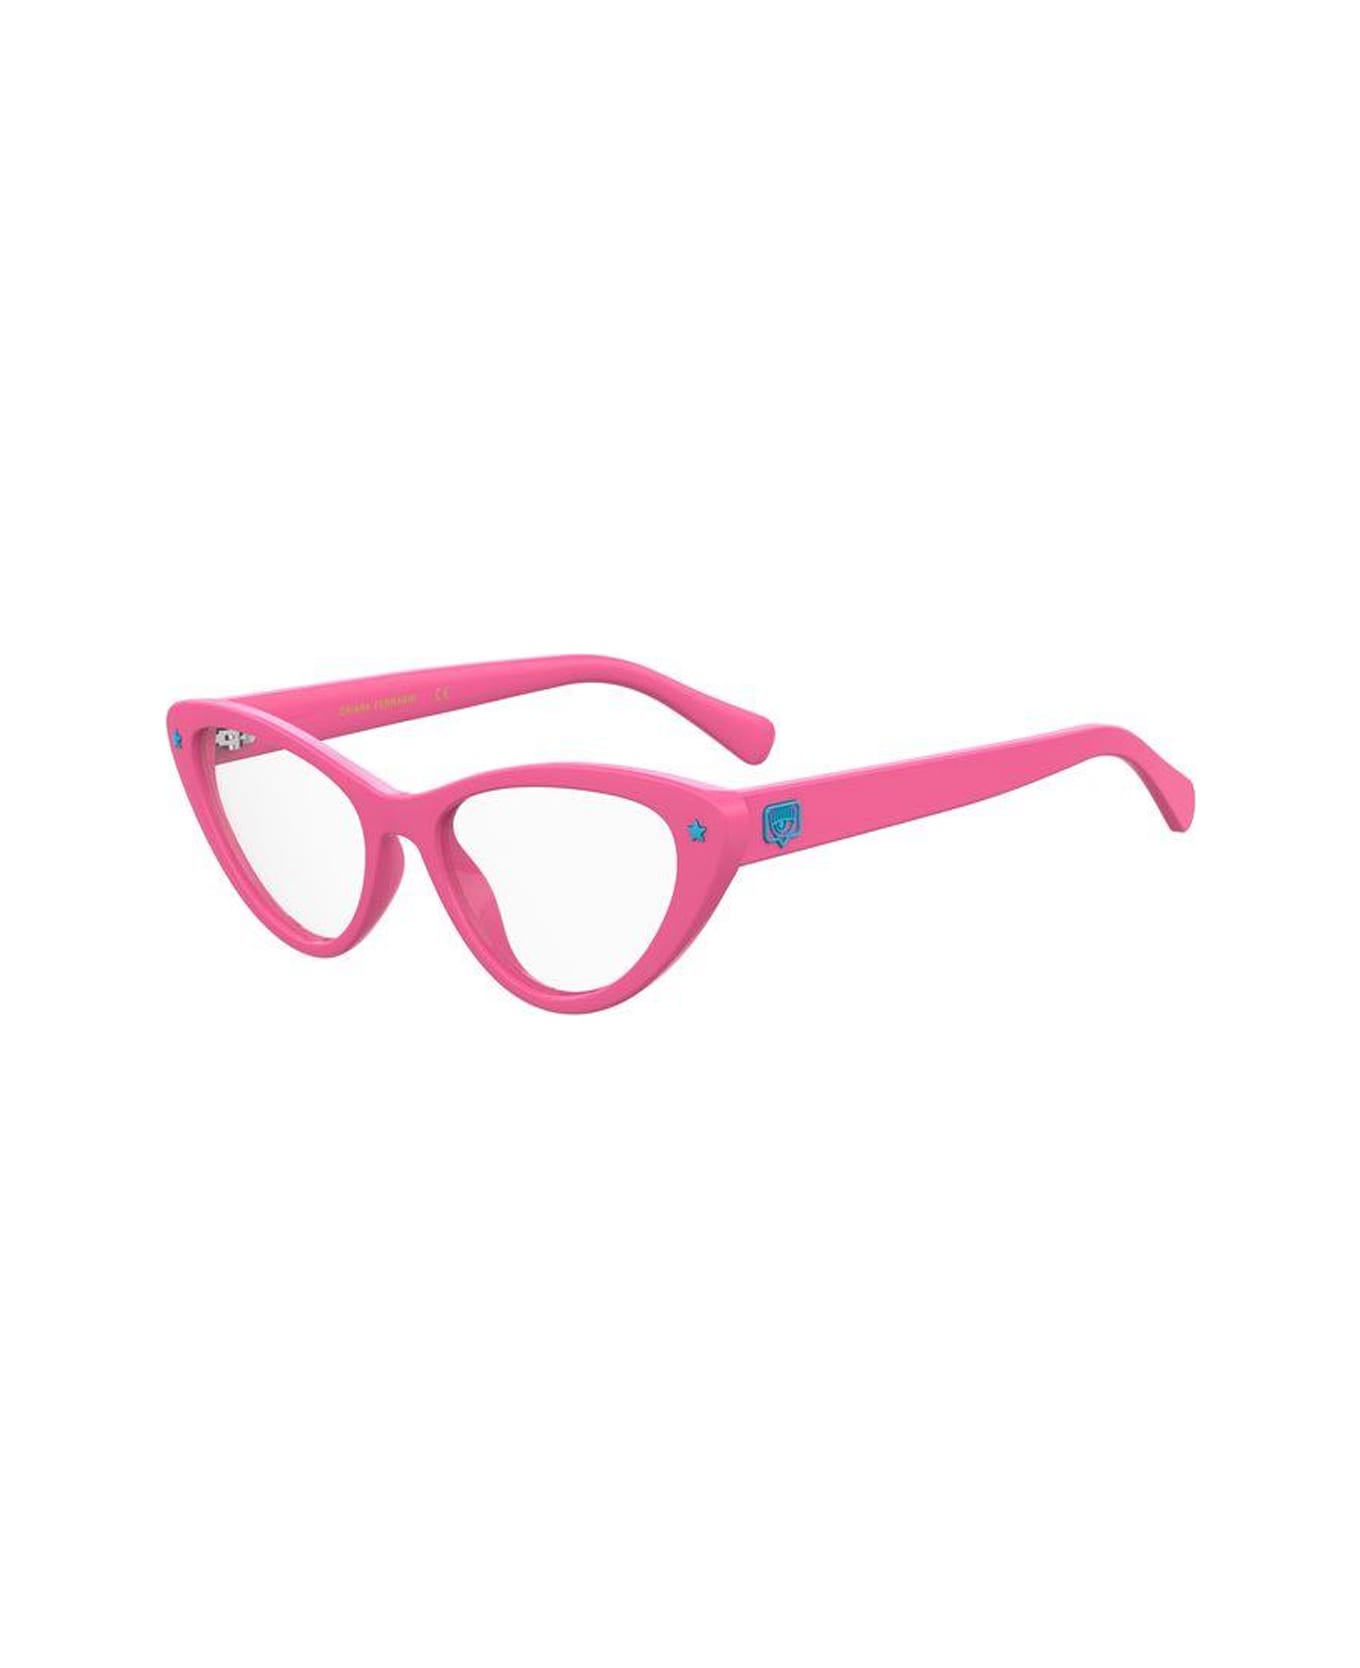 Chiara Ferragni Cf 7012 Pink Glasses - Rosa アイウェア